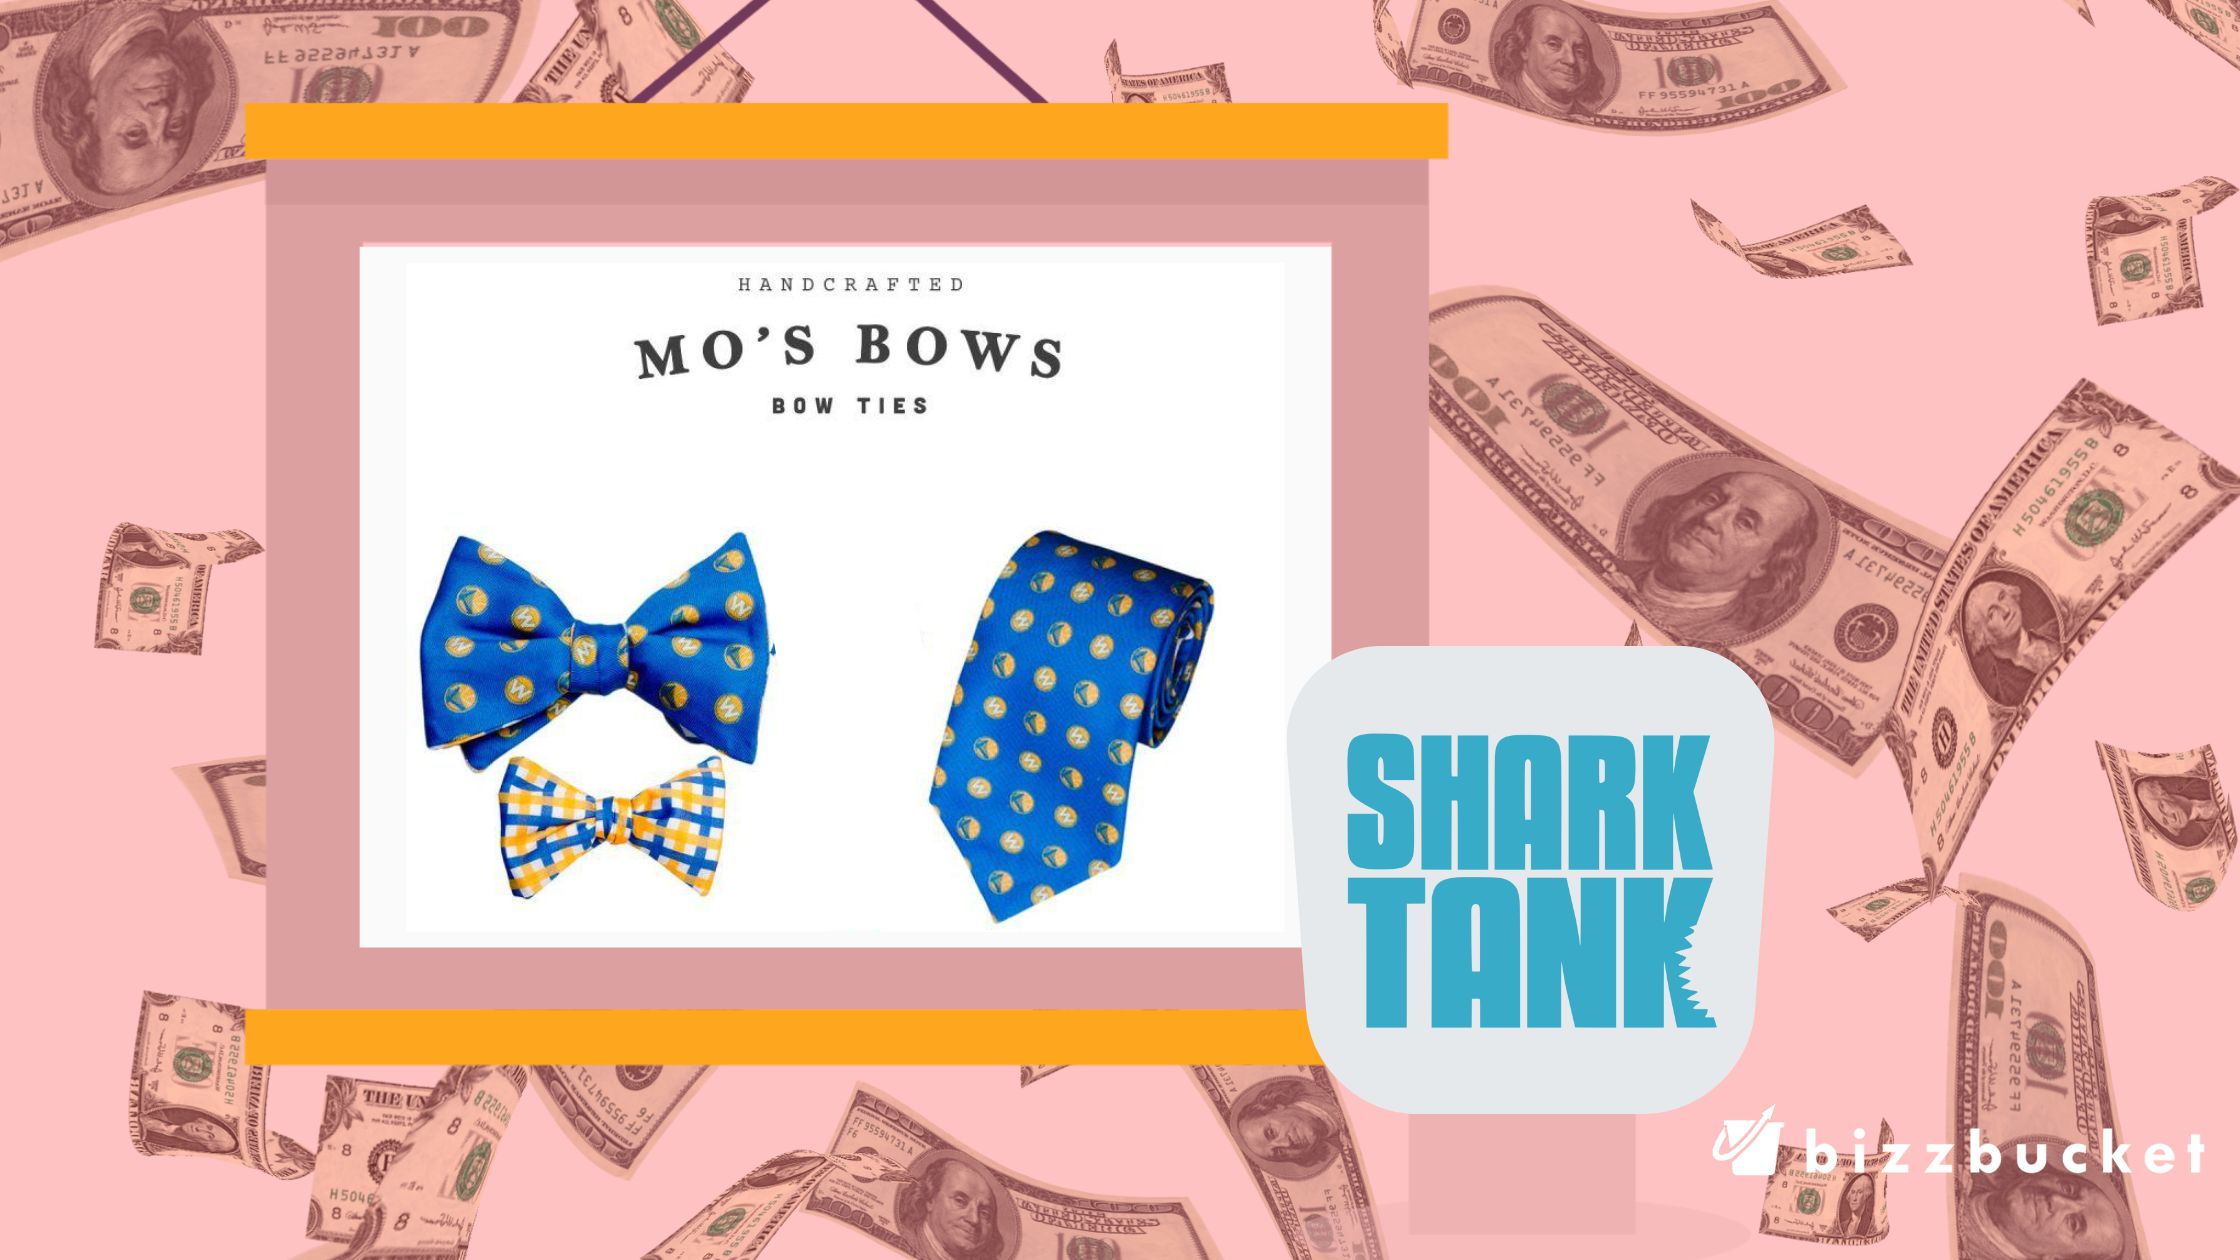 Mo's Bows shark tank update